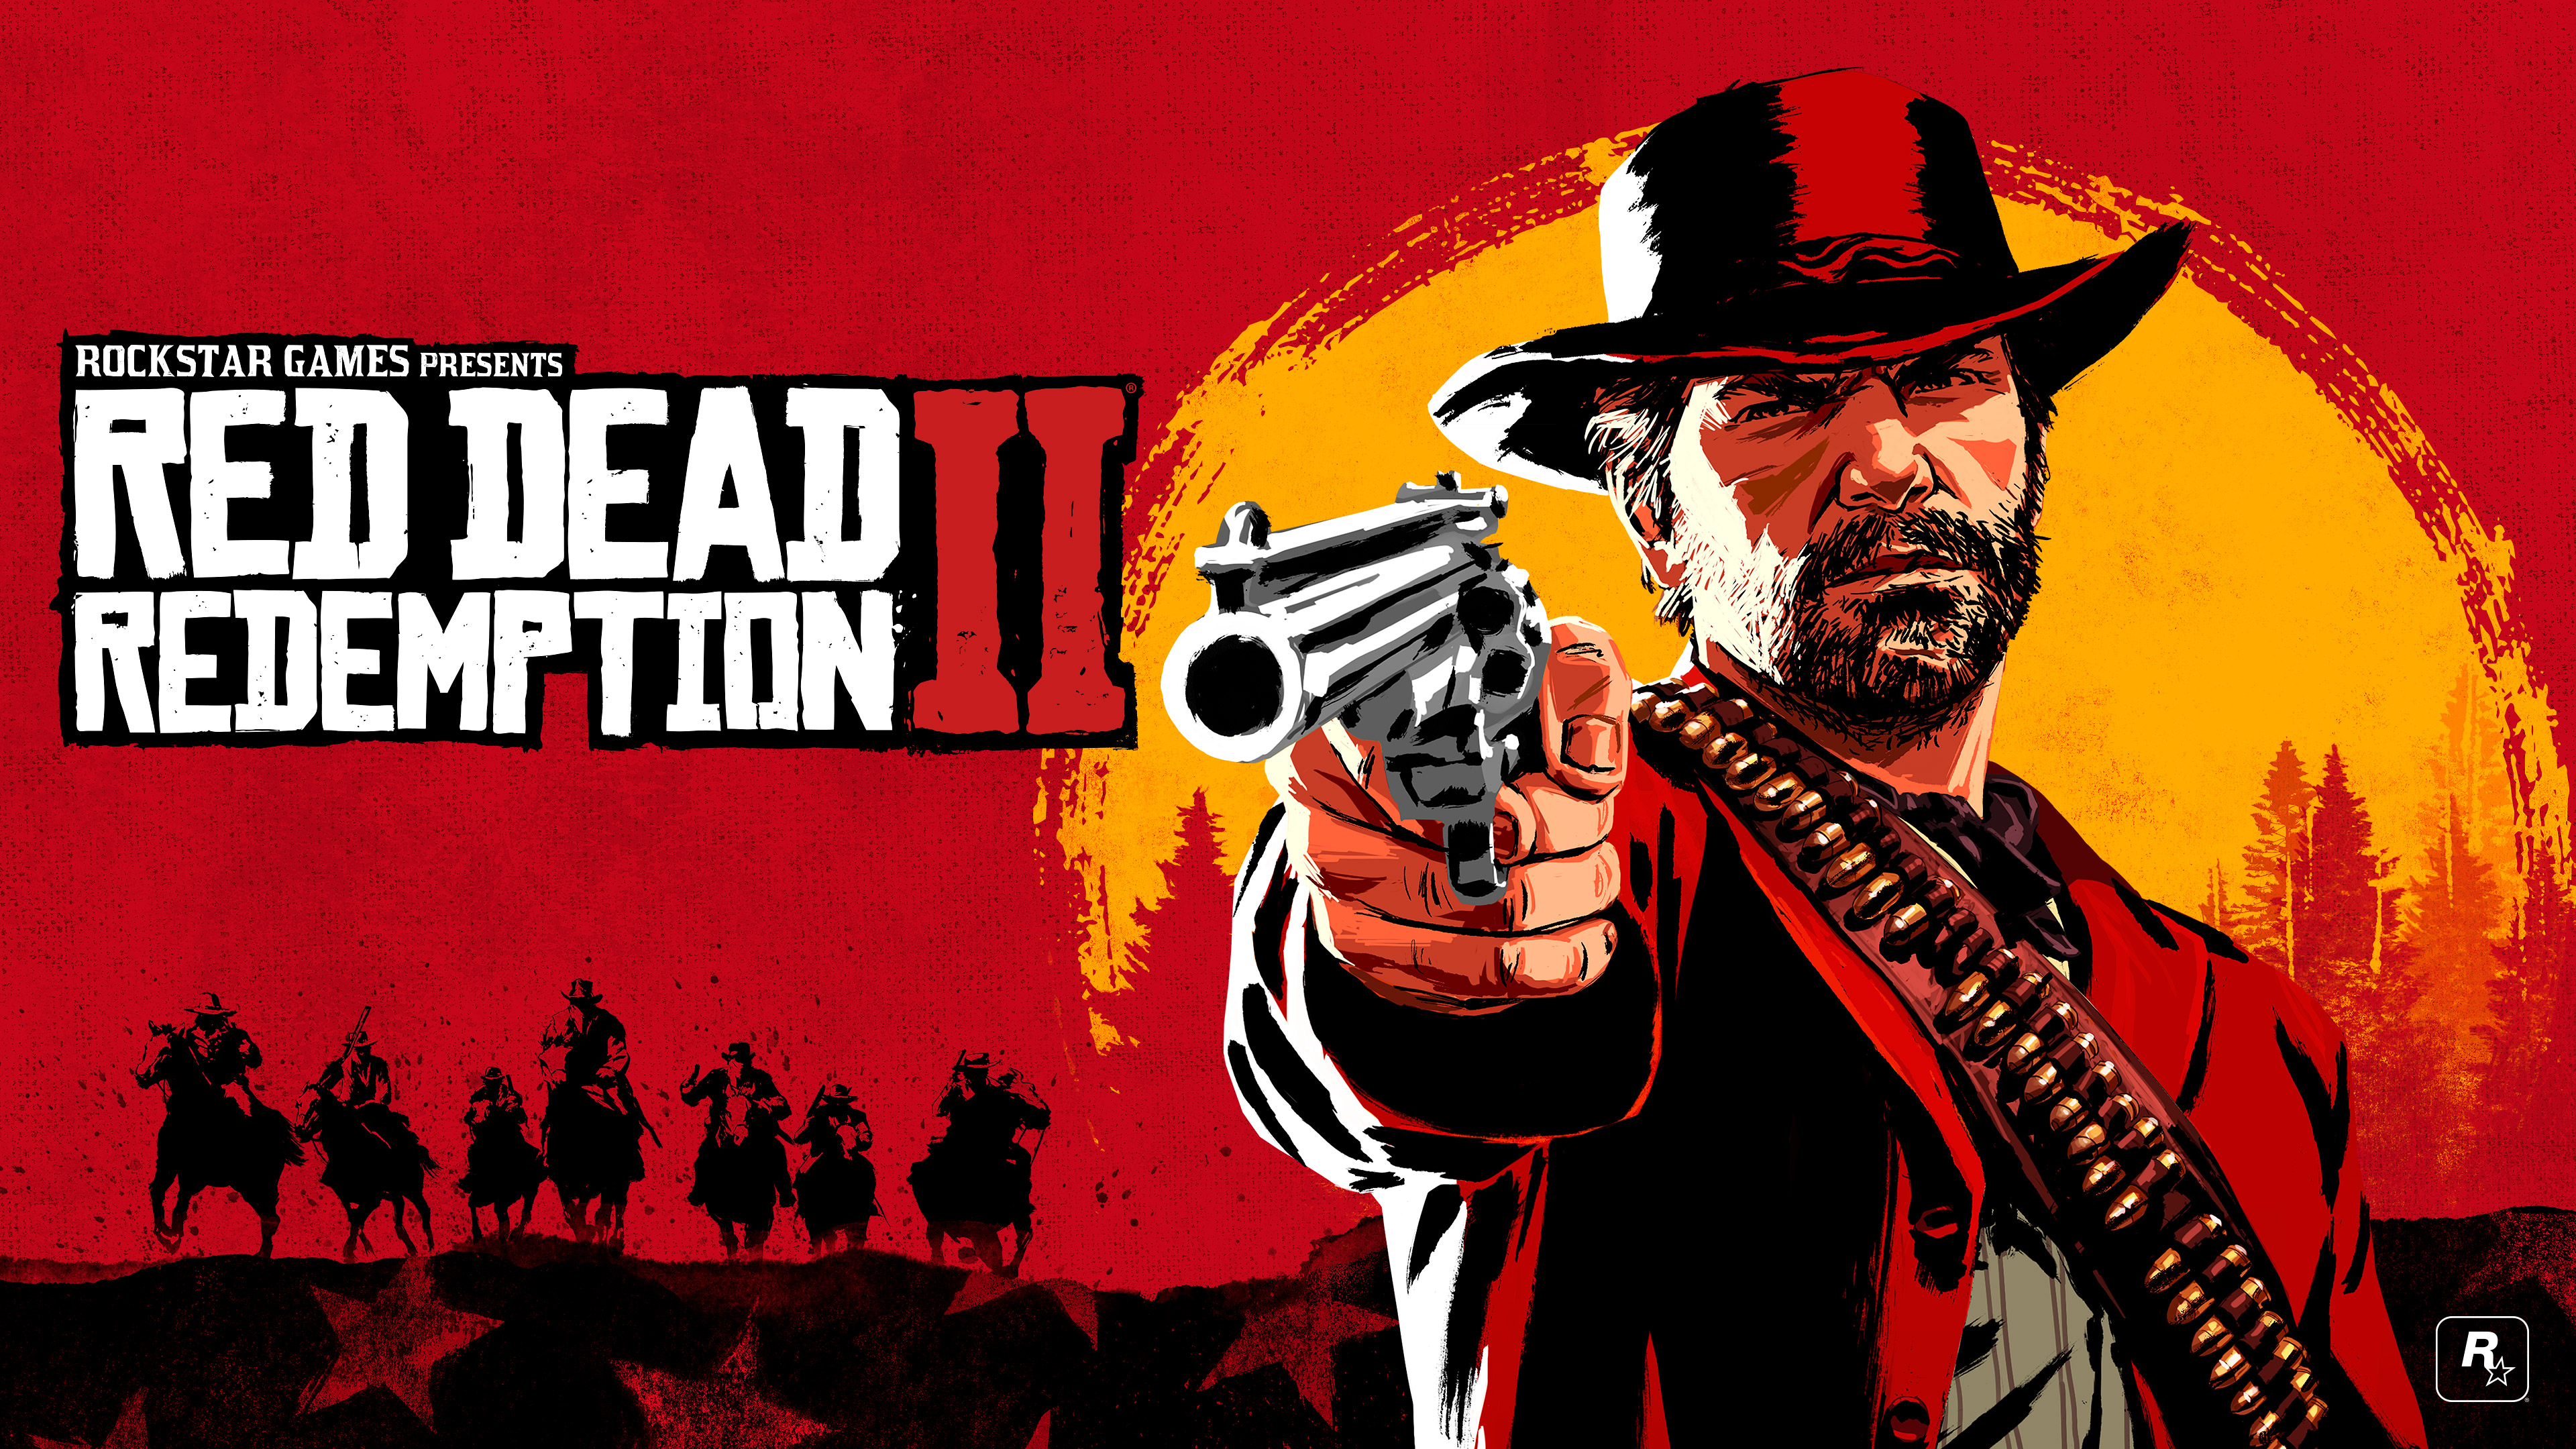 Popular Red Dead Redemption 2 background images